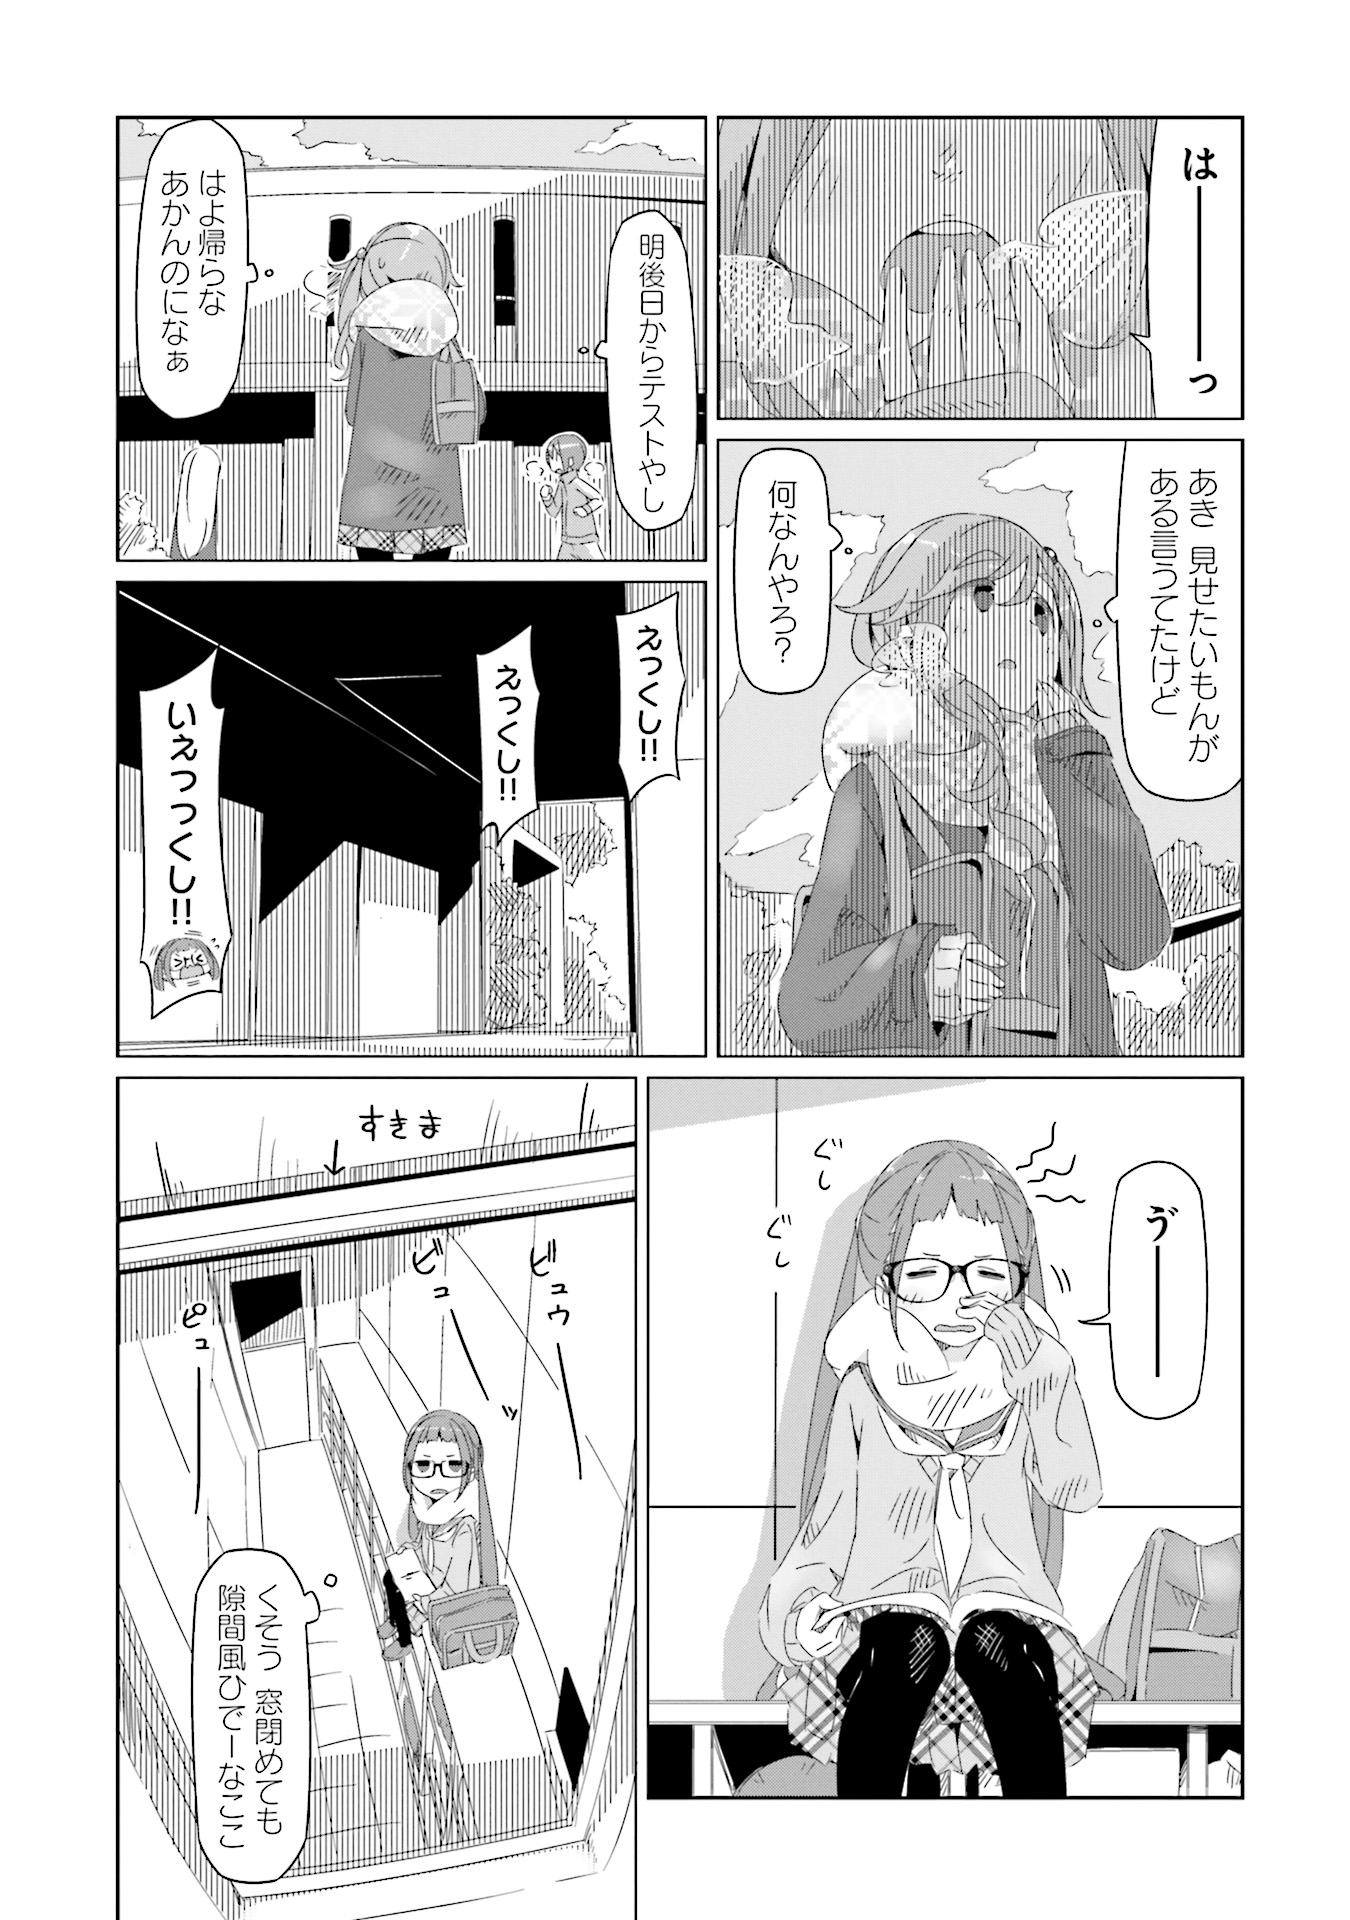 Yuru Camp - Chapter 13 - Page 1